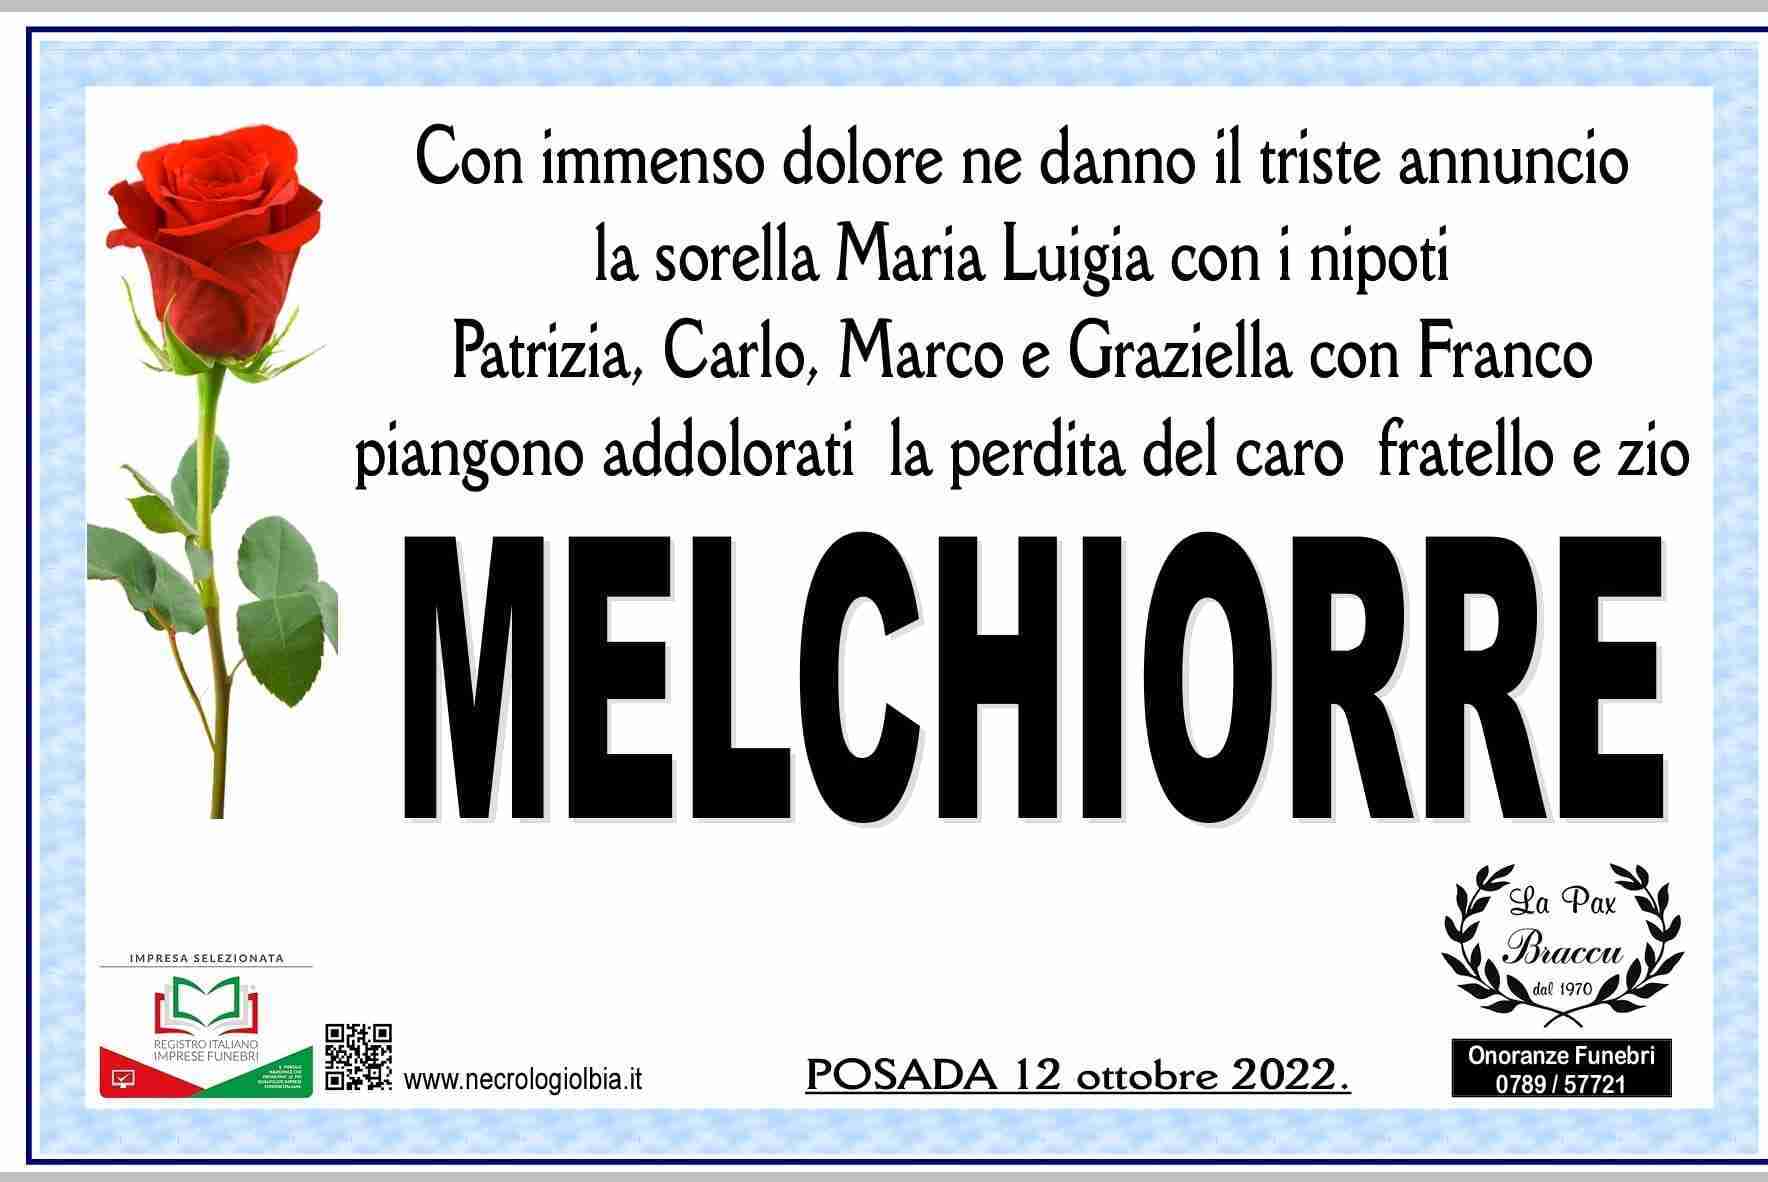 Melchiorre Demurtas